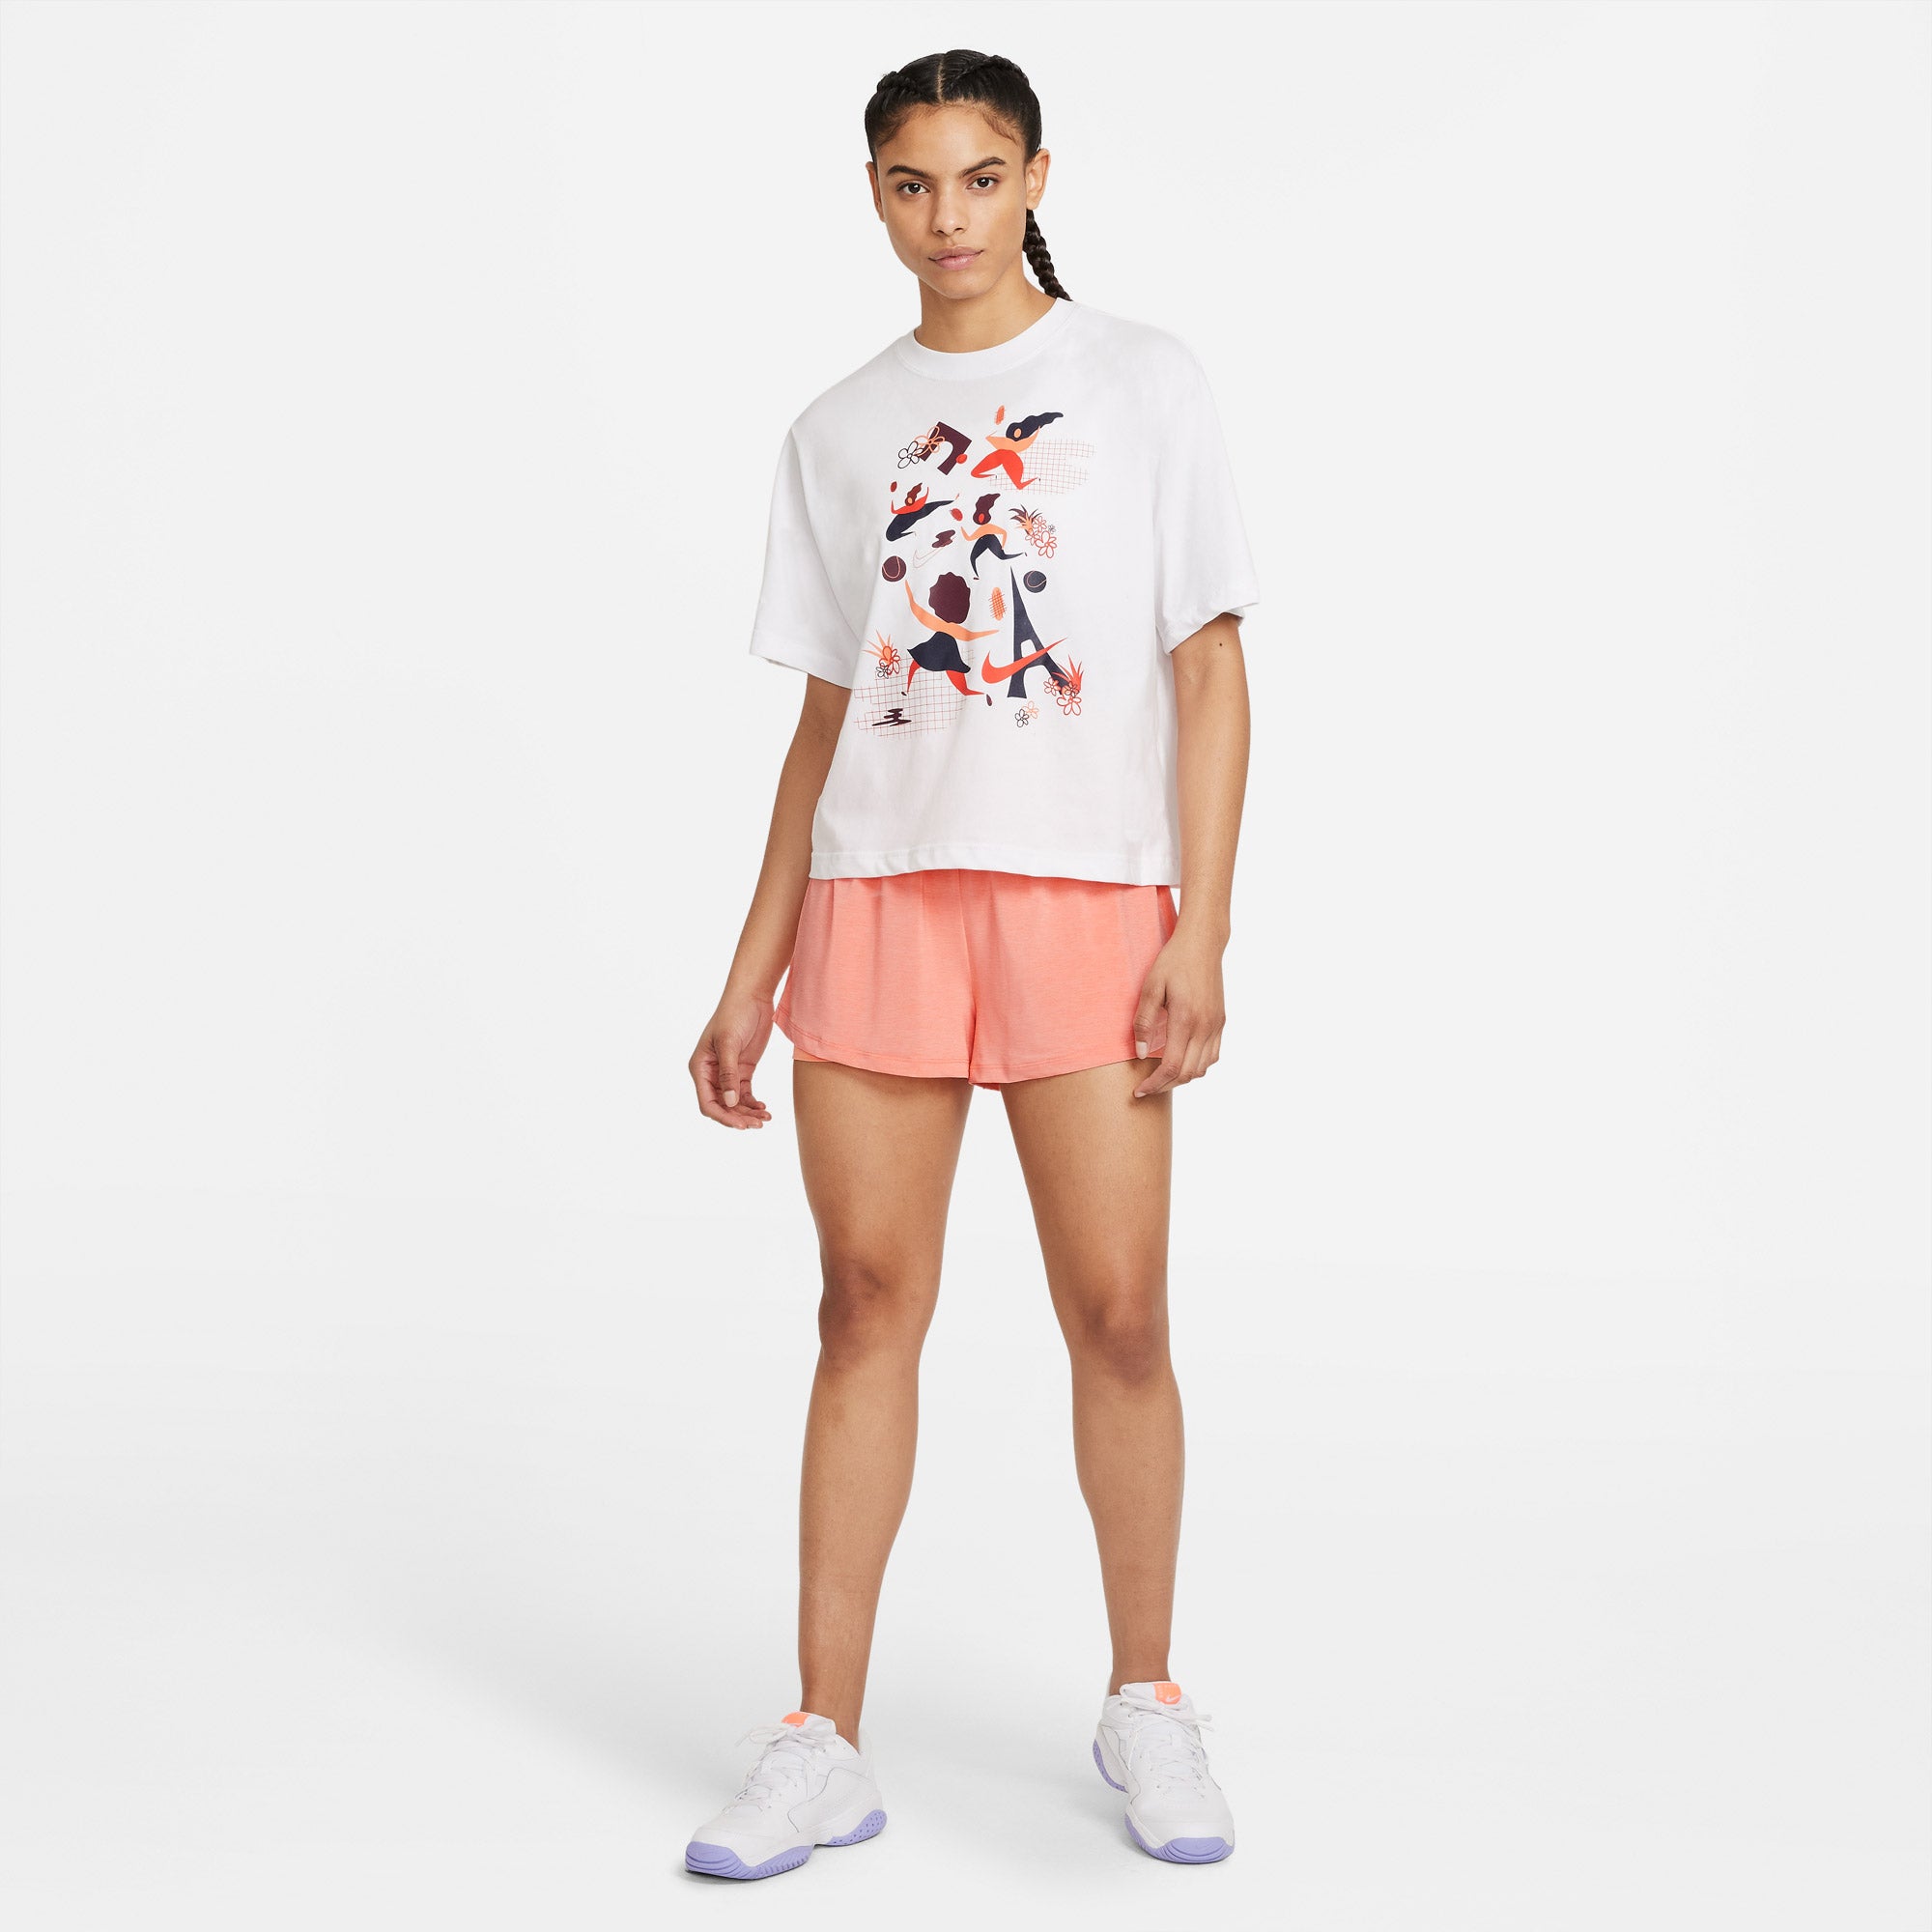 Nike Dri-FIT Women's Graphic Tennis T-Shirt White (3)